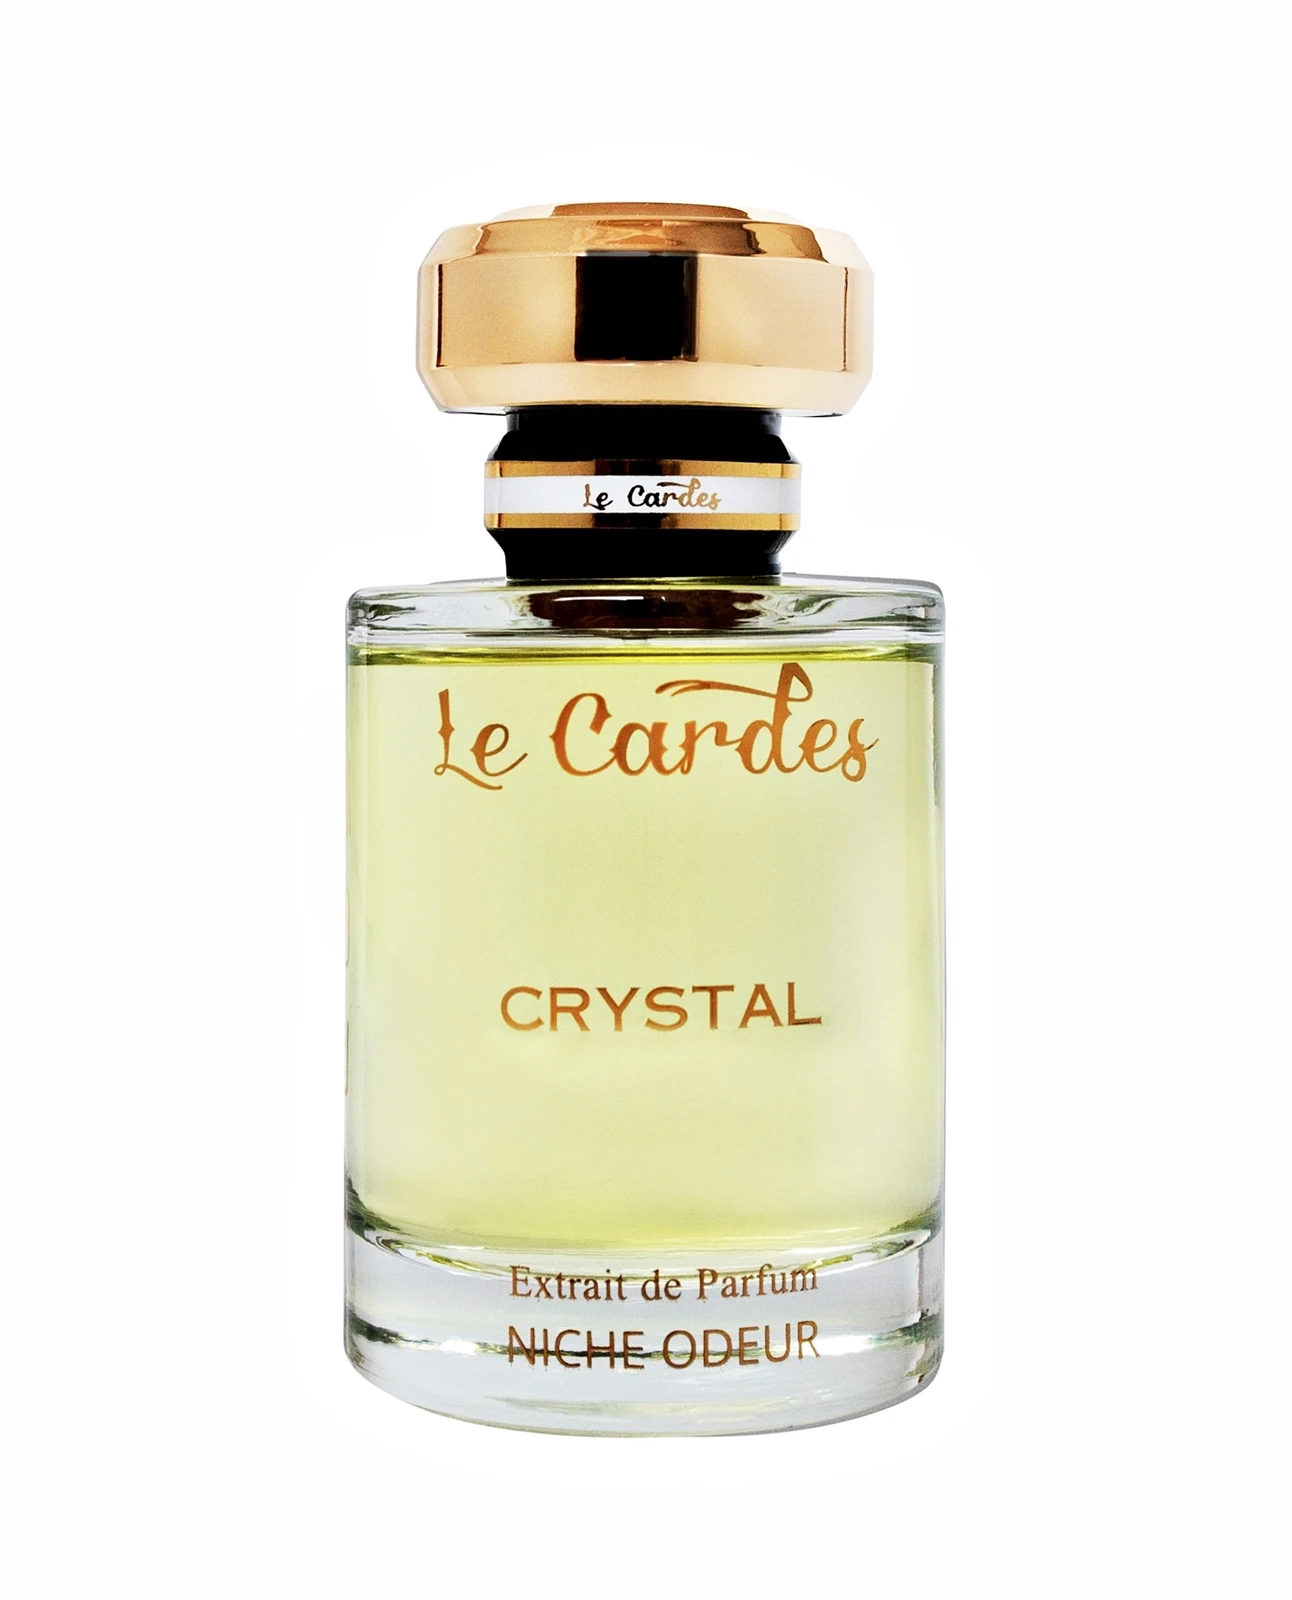 Le Cardes Plus Crsytal афродизиак экстракт парфюма 60 мл женские парфюмы от AliExpress RU&CIS NEW